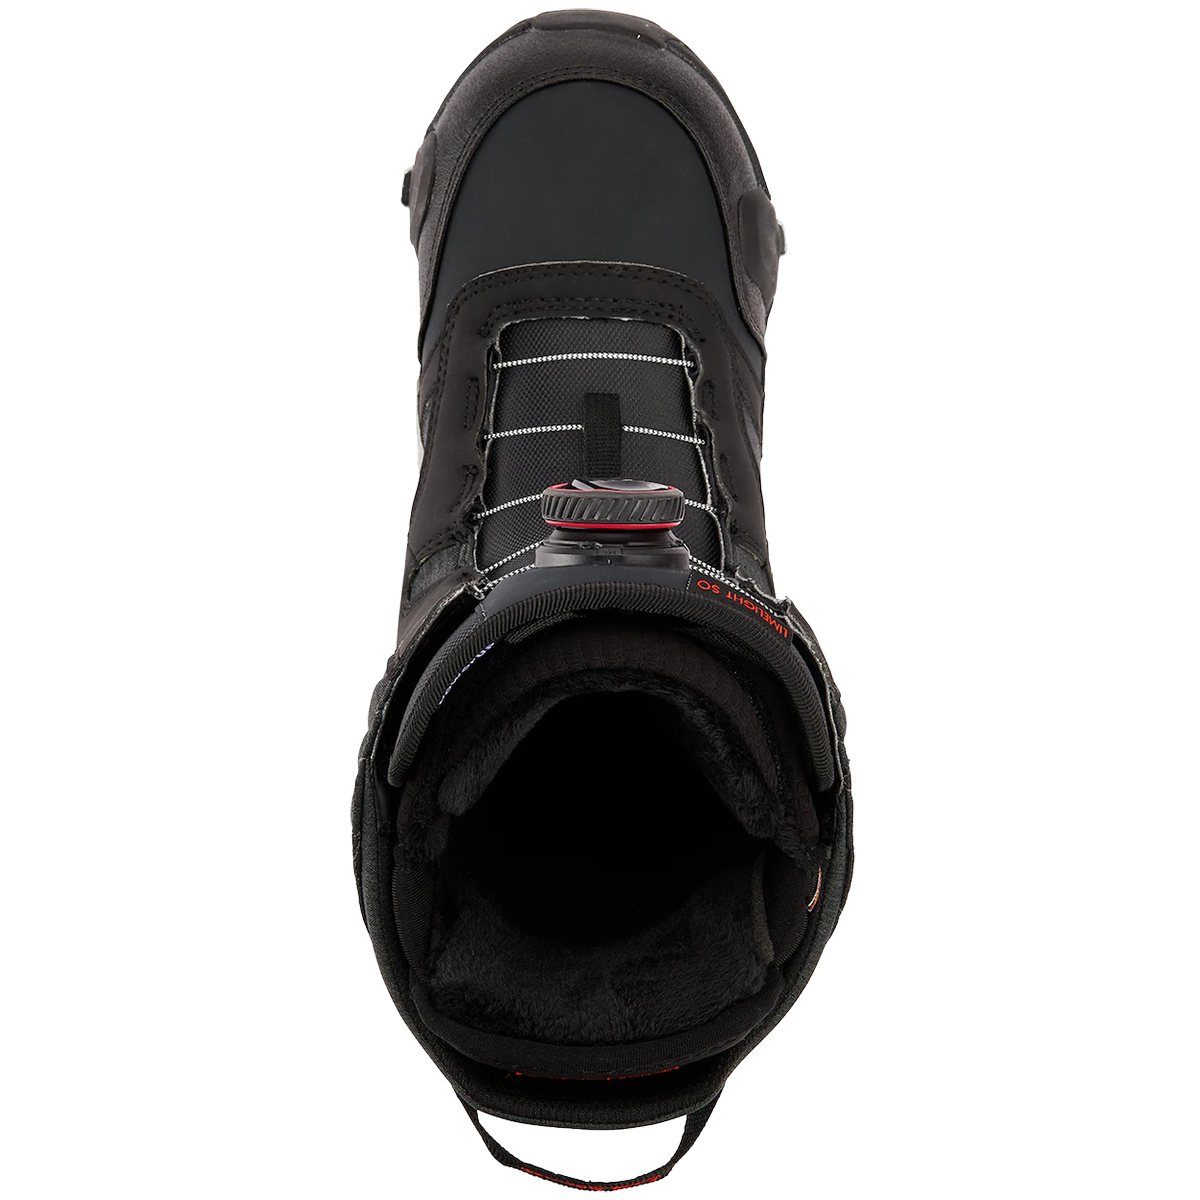 Rubber Supreme Mens sandals, Model Name/Number: S-2, Size: 40-44